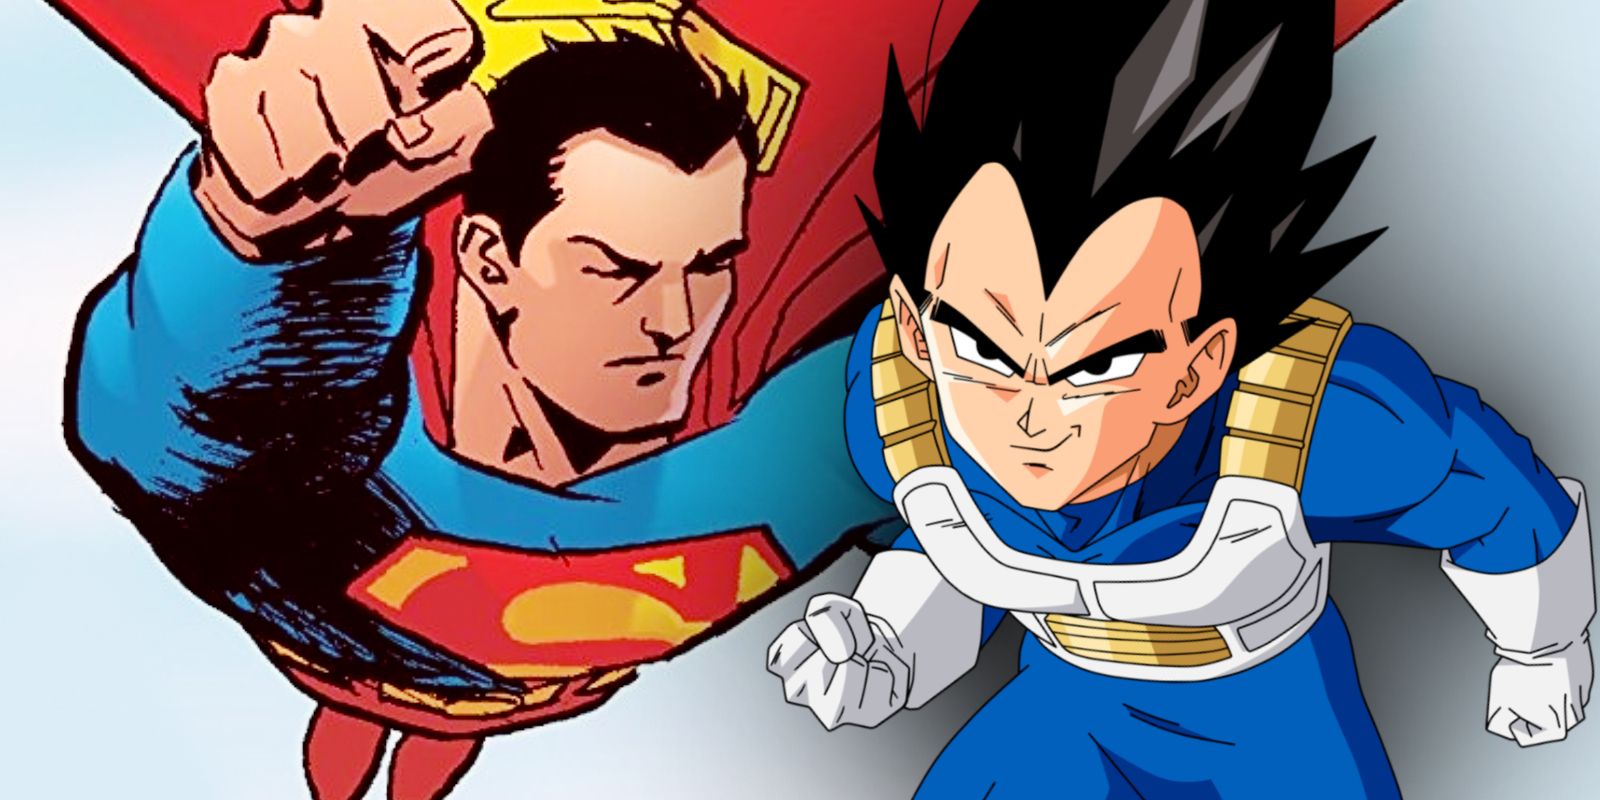 Dragon Ball's Vegeta Vs. Superman, Who'd Win in a Fight?